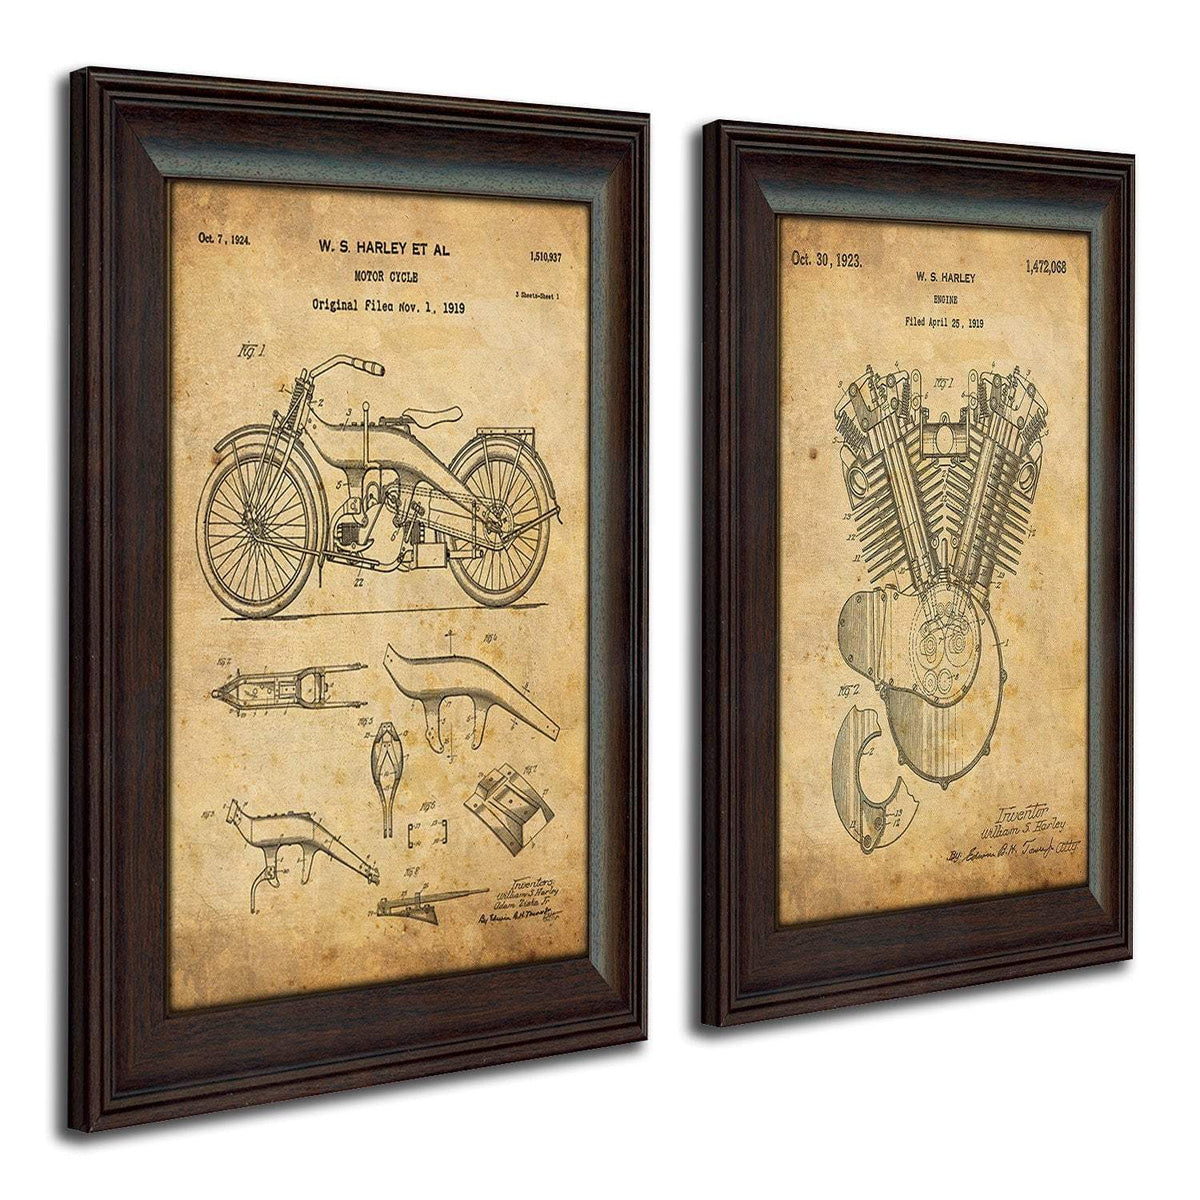 Original Harley Davidson motorcycle and engine US patent drawing art